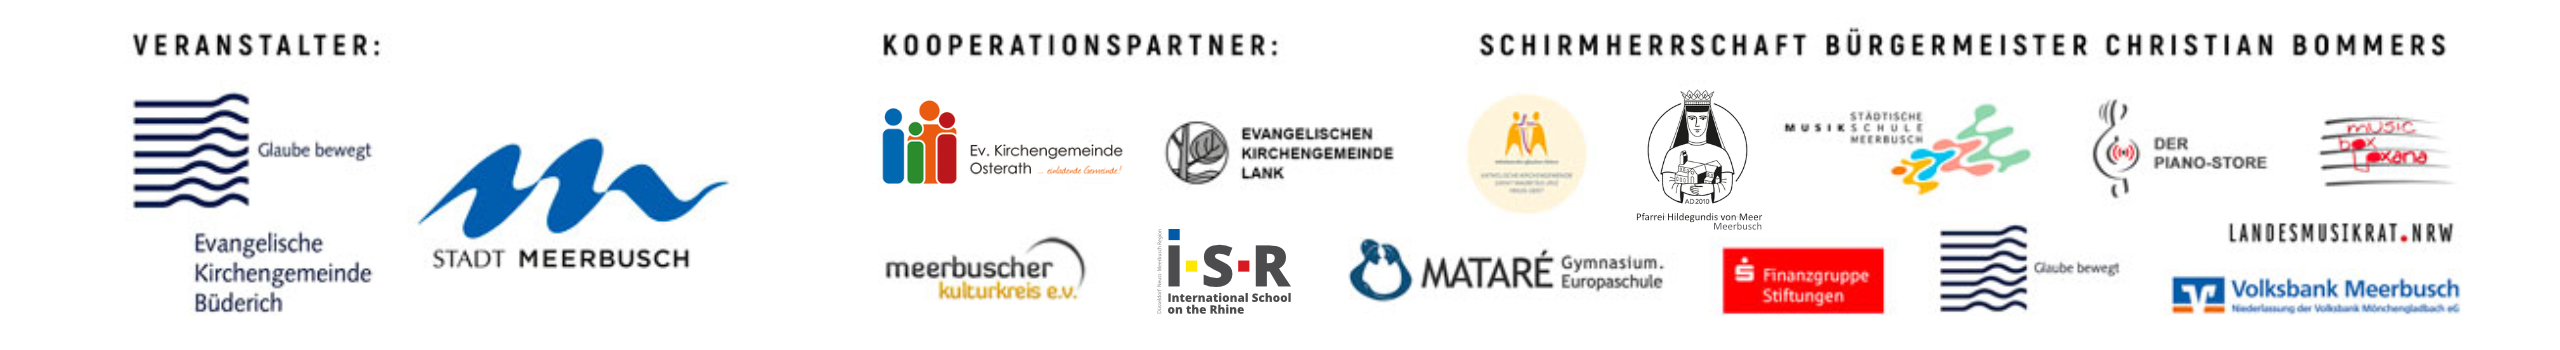 Logos der Veranstalter, Förderer und Sponsoren